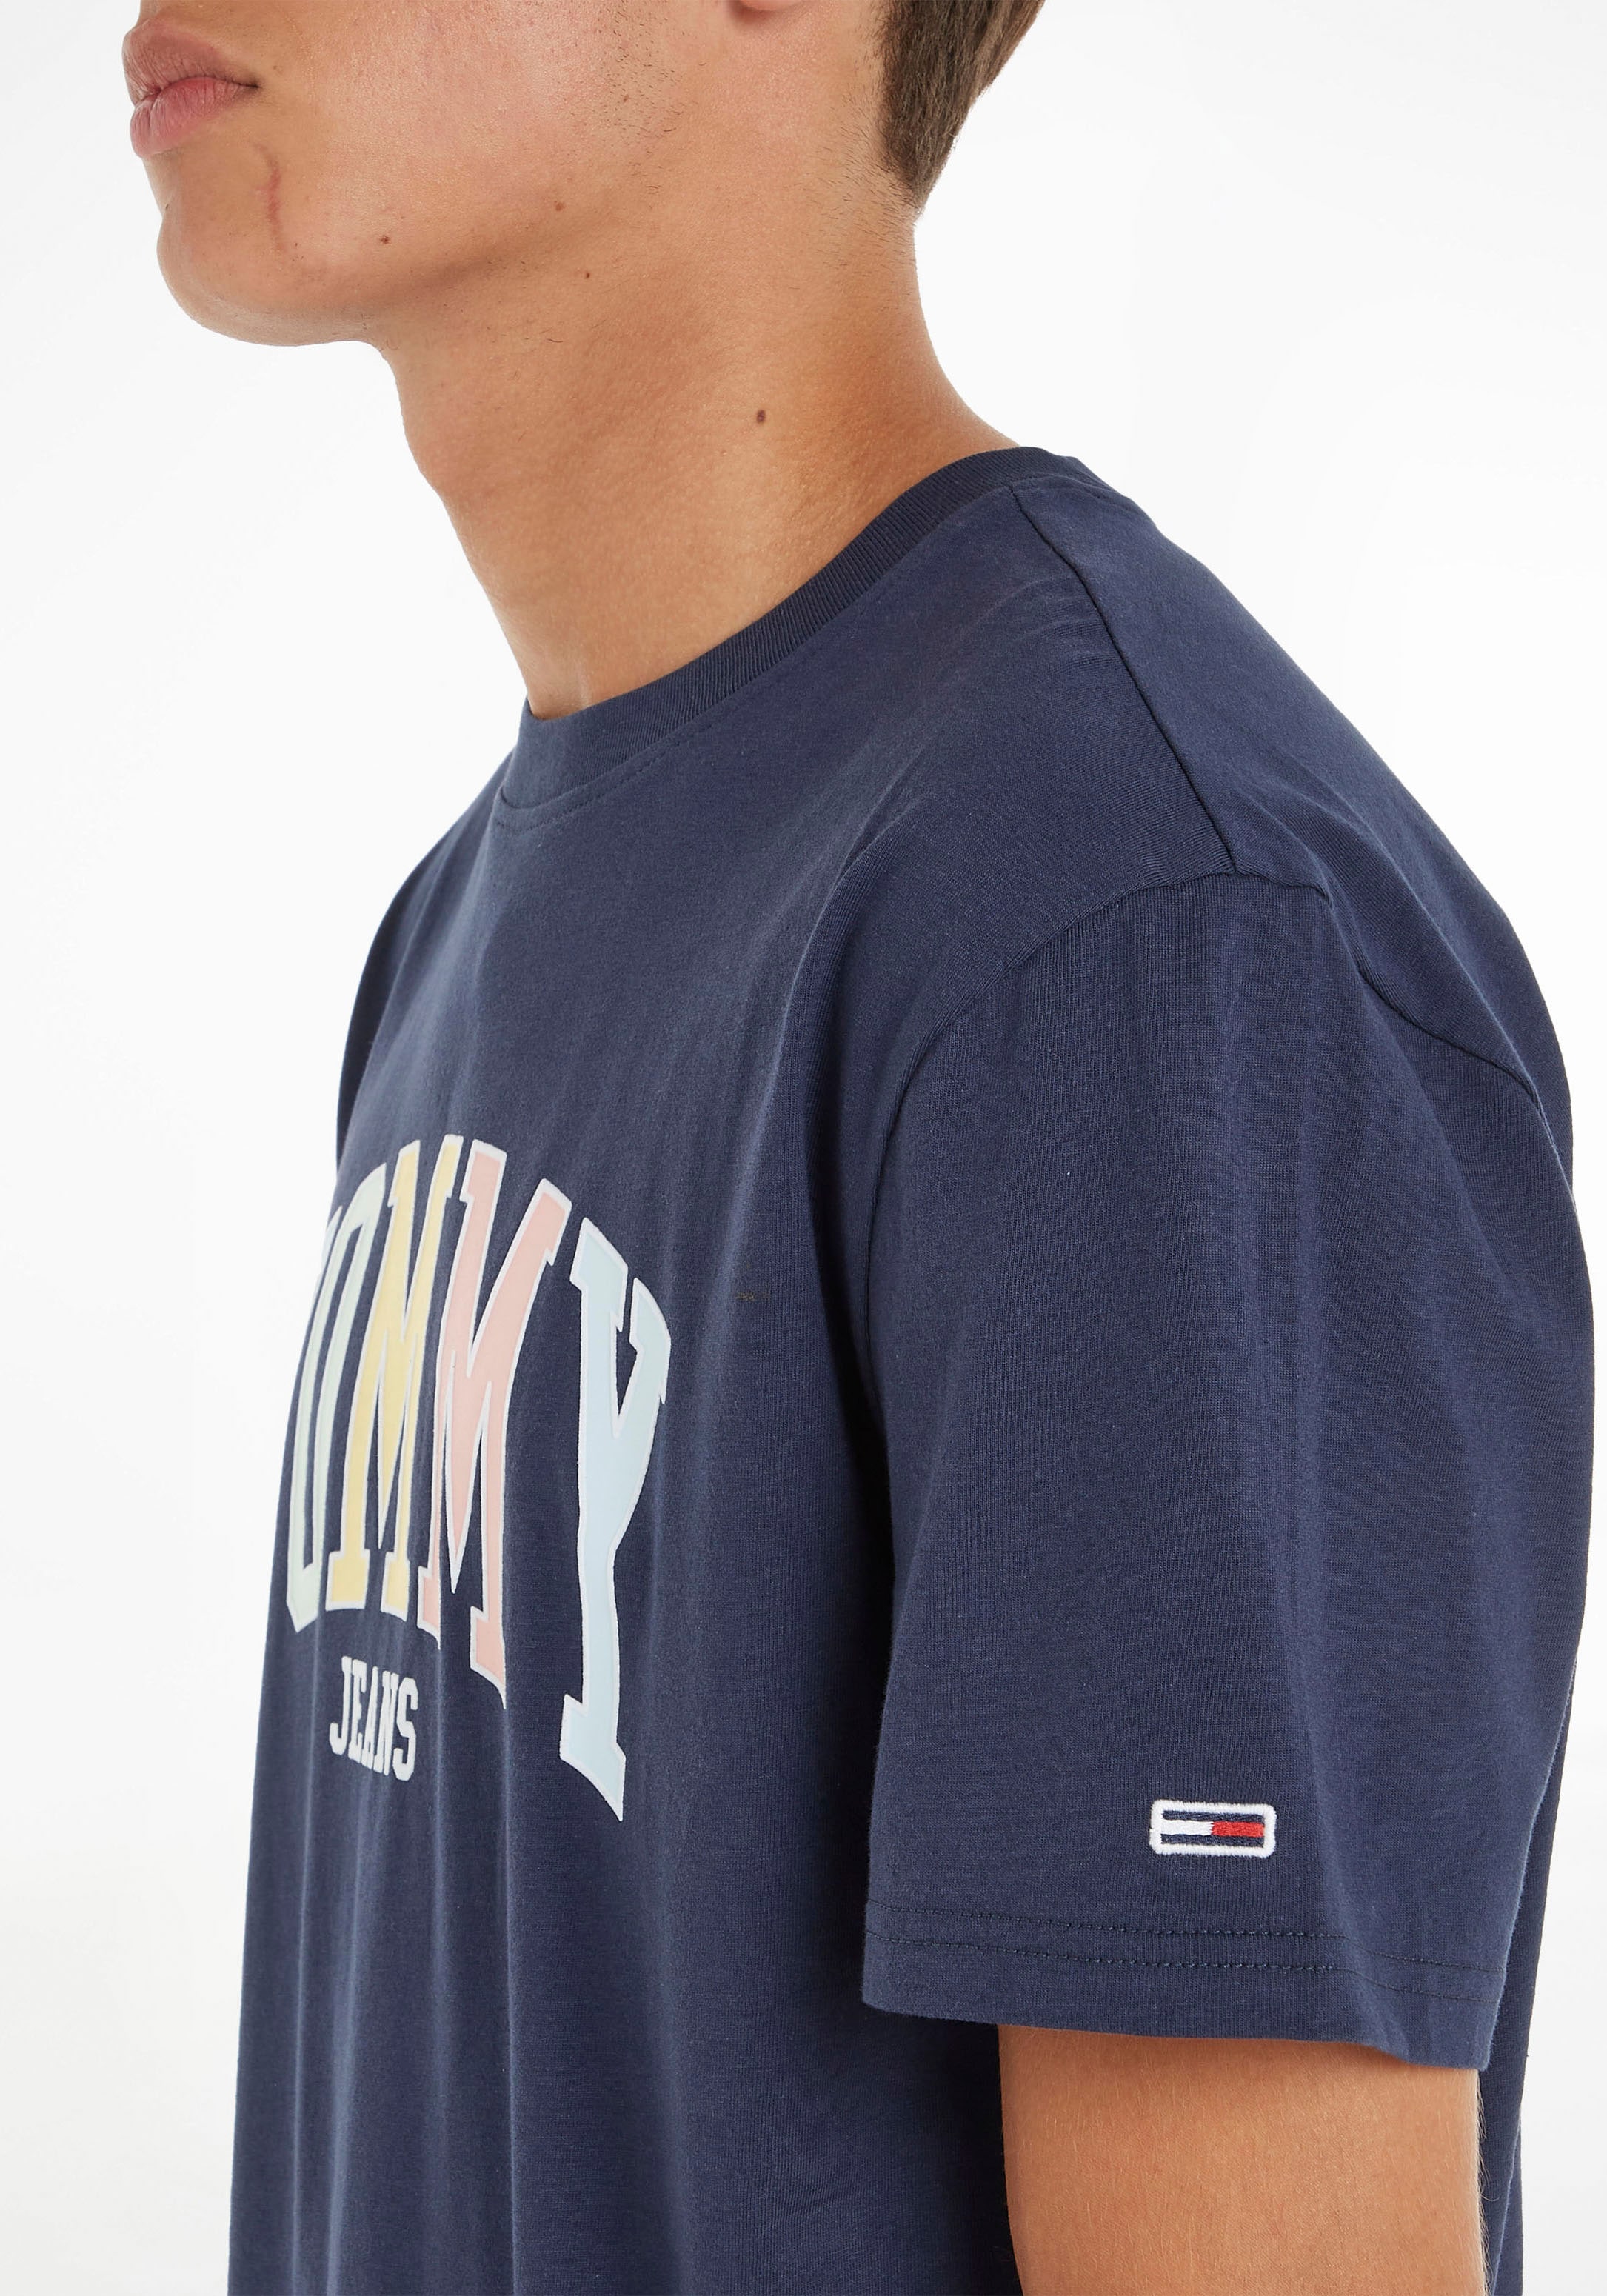 Tommy Jeans T-Shirt »TJM CLSC COLLEGE POP TOMMY TEE«, mit großem Logo-Frontmotiv  bei ♕